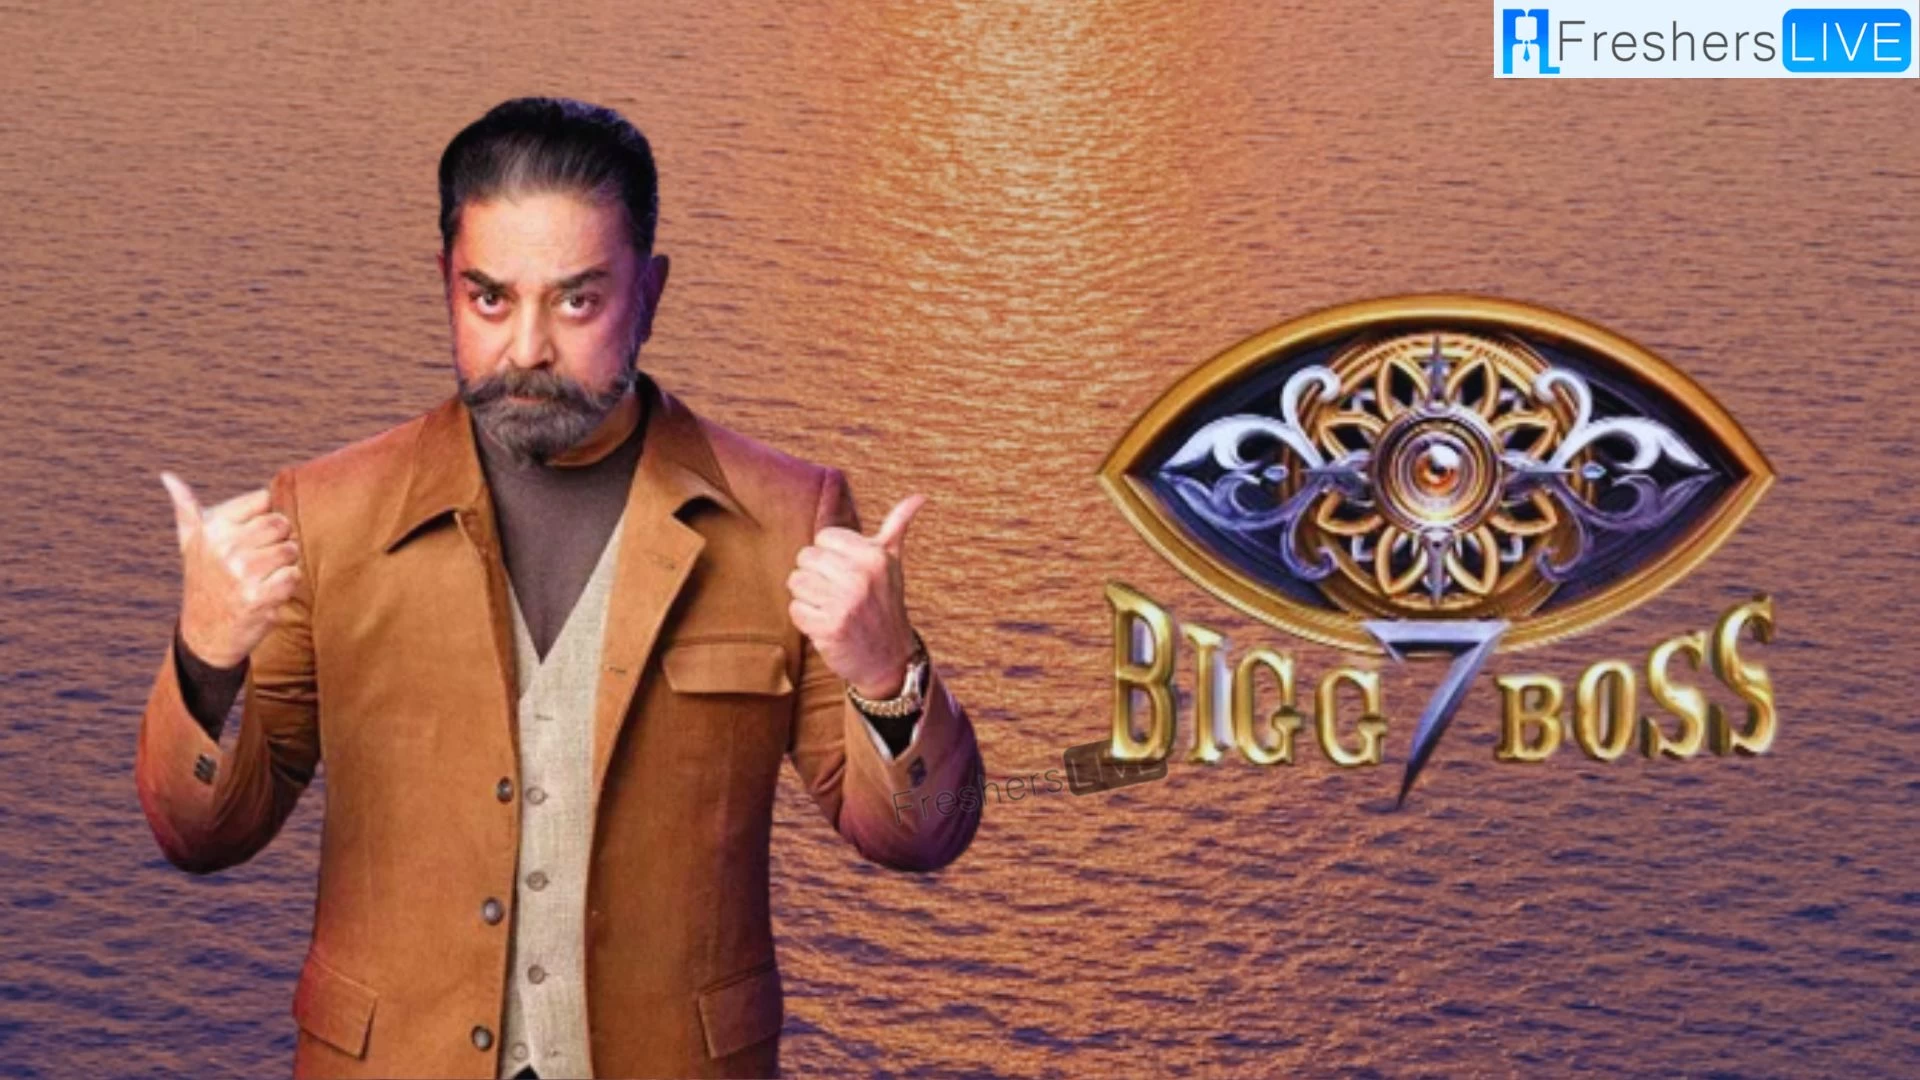 Bigg Boss Tamil Season 7 Live Streaming: How to Watch Bigg Boss Season 7 Tamil All Episodes?